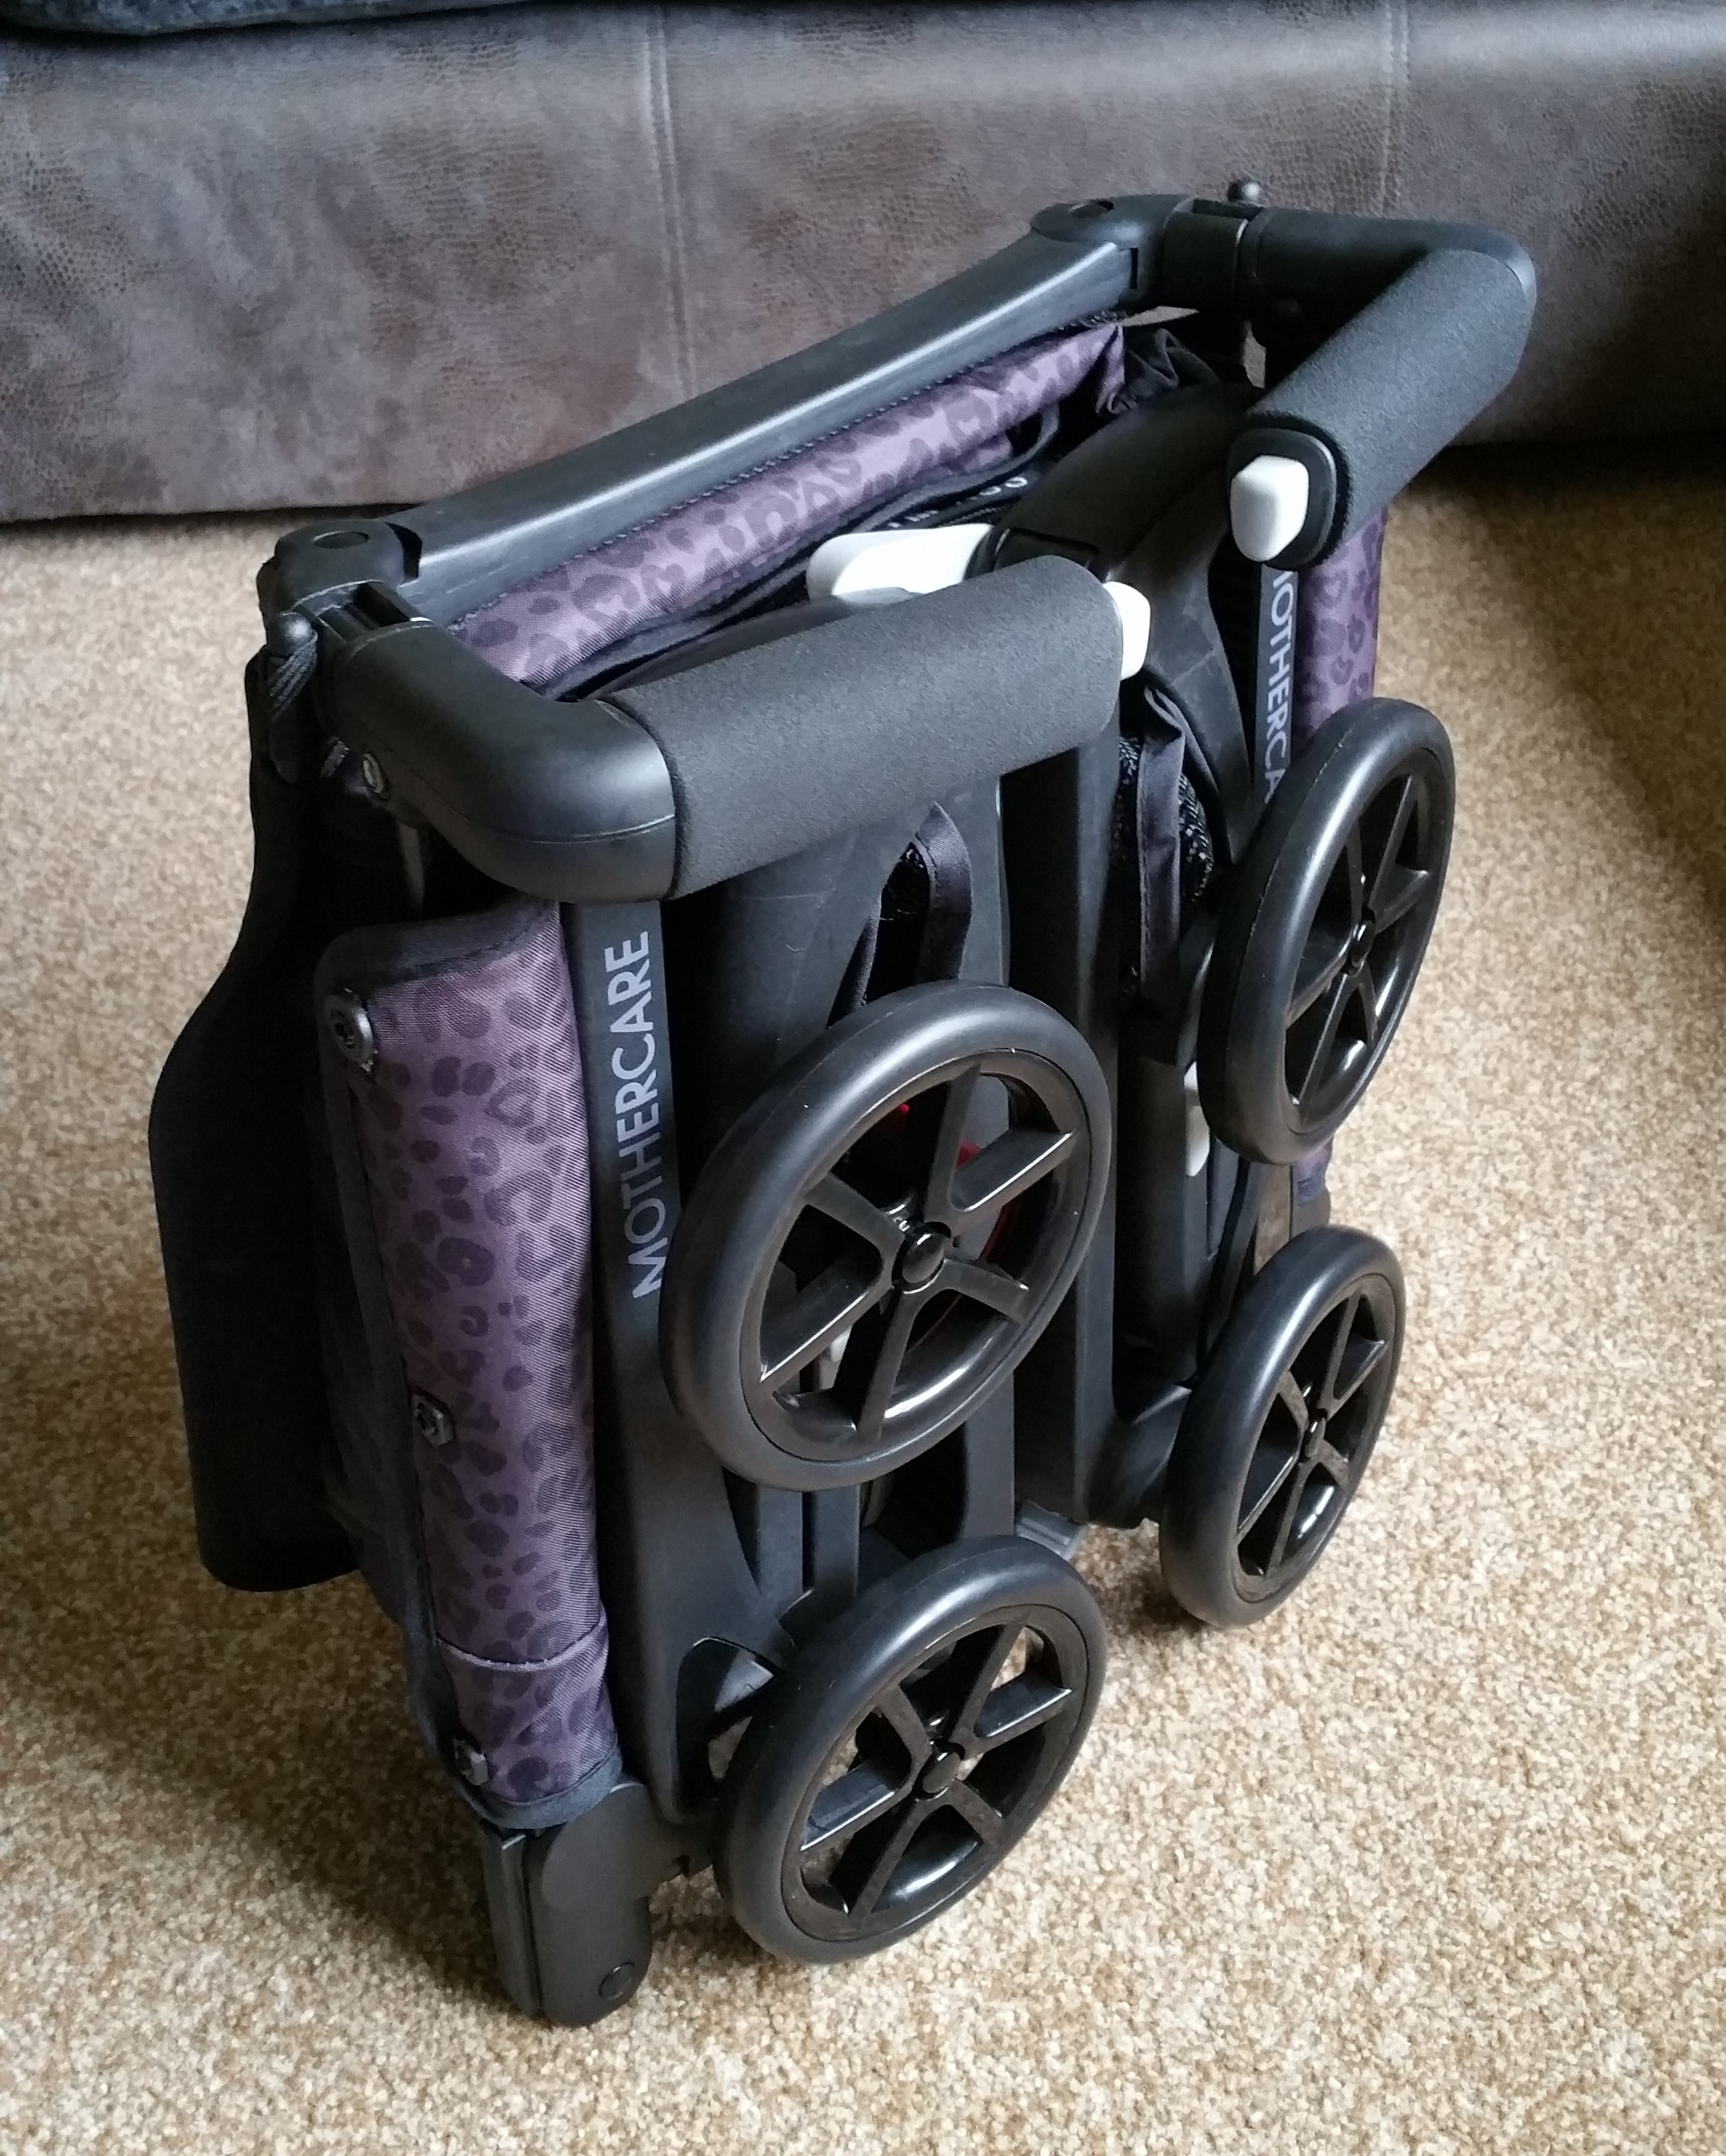 mothercare xxs stroller review